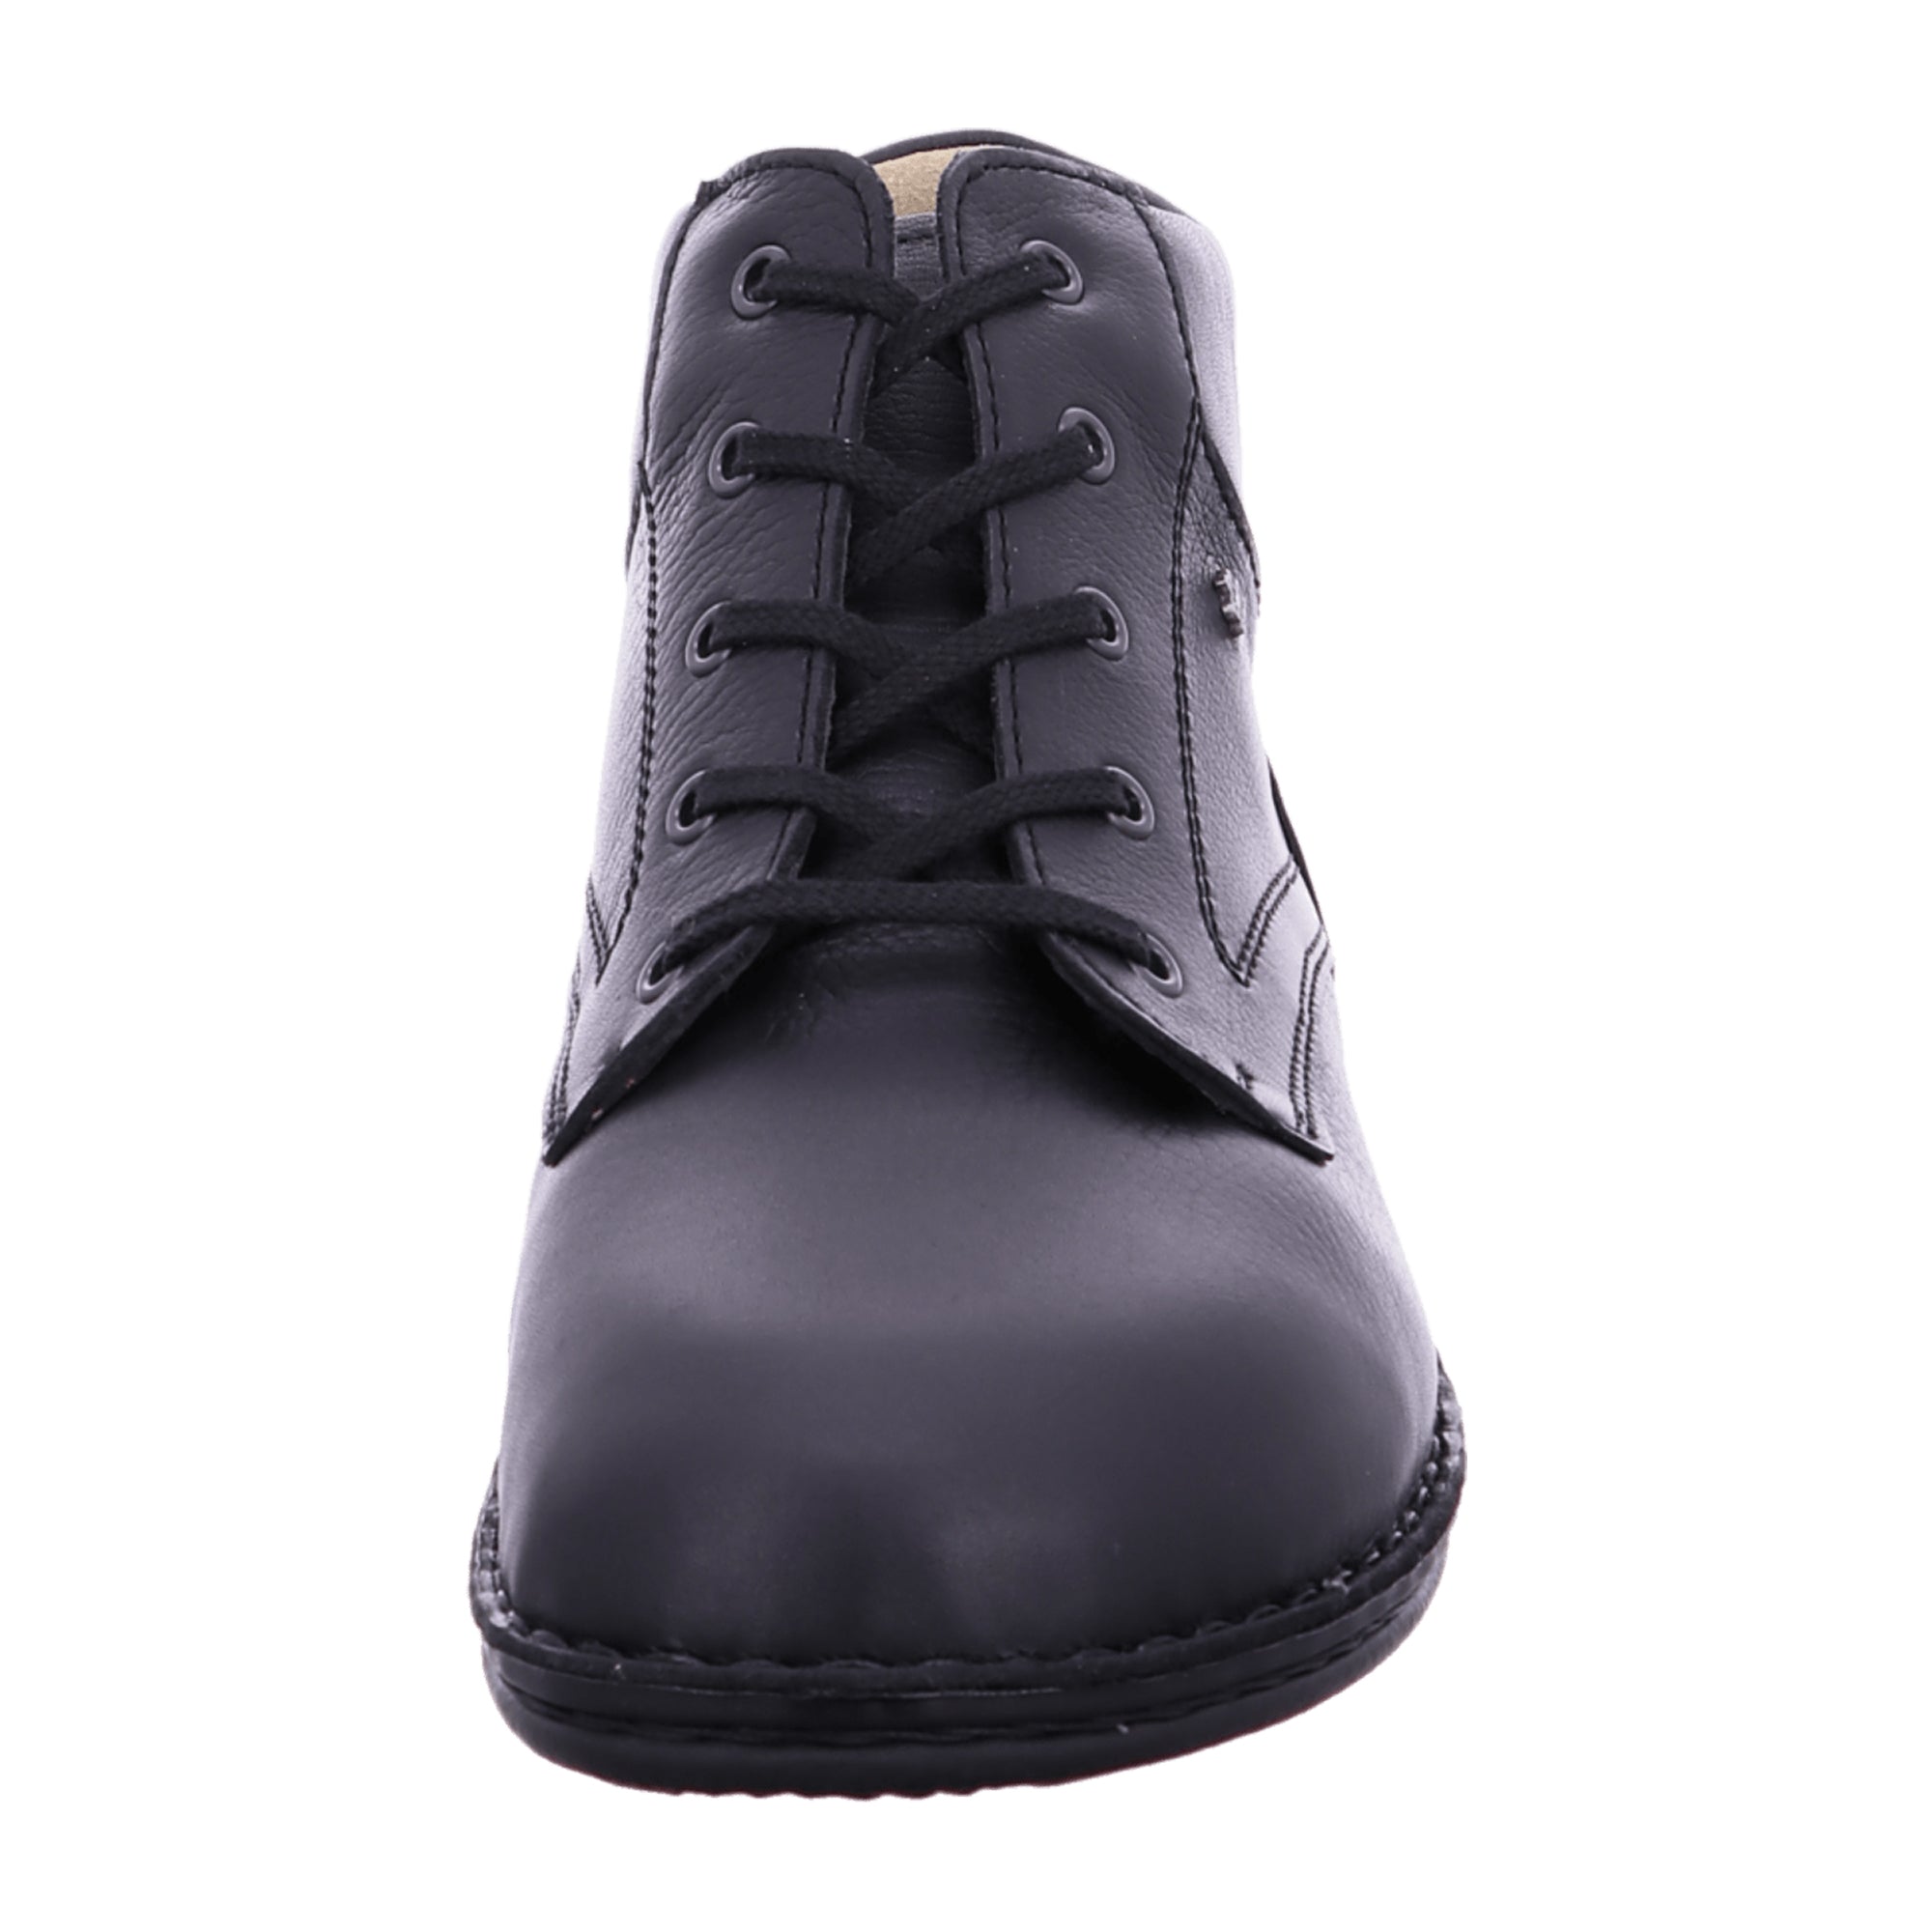 Finn Comfort 96104 Men's Black Comfort Shoes - Stylish & Durable